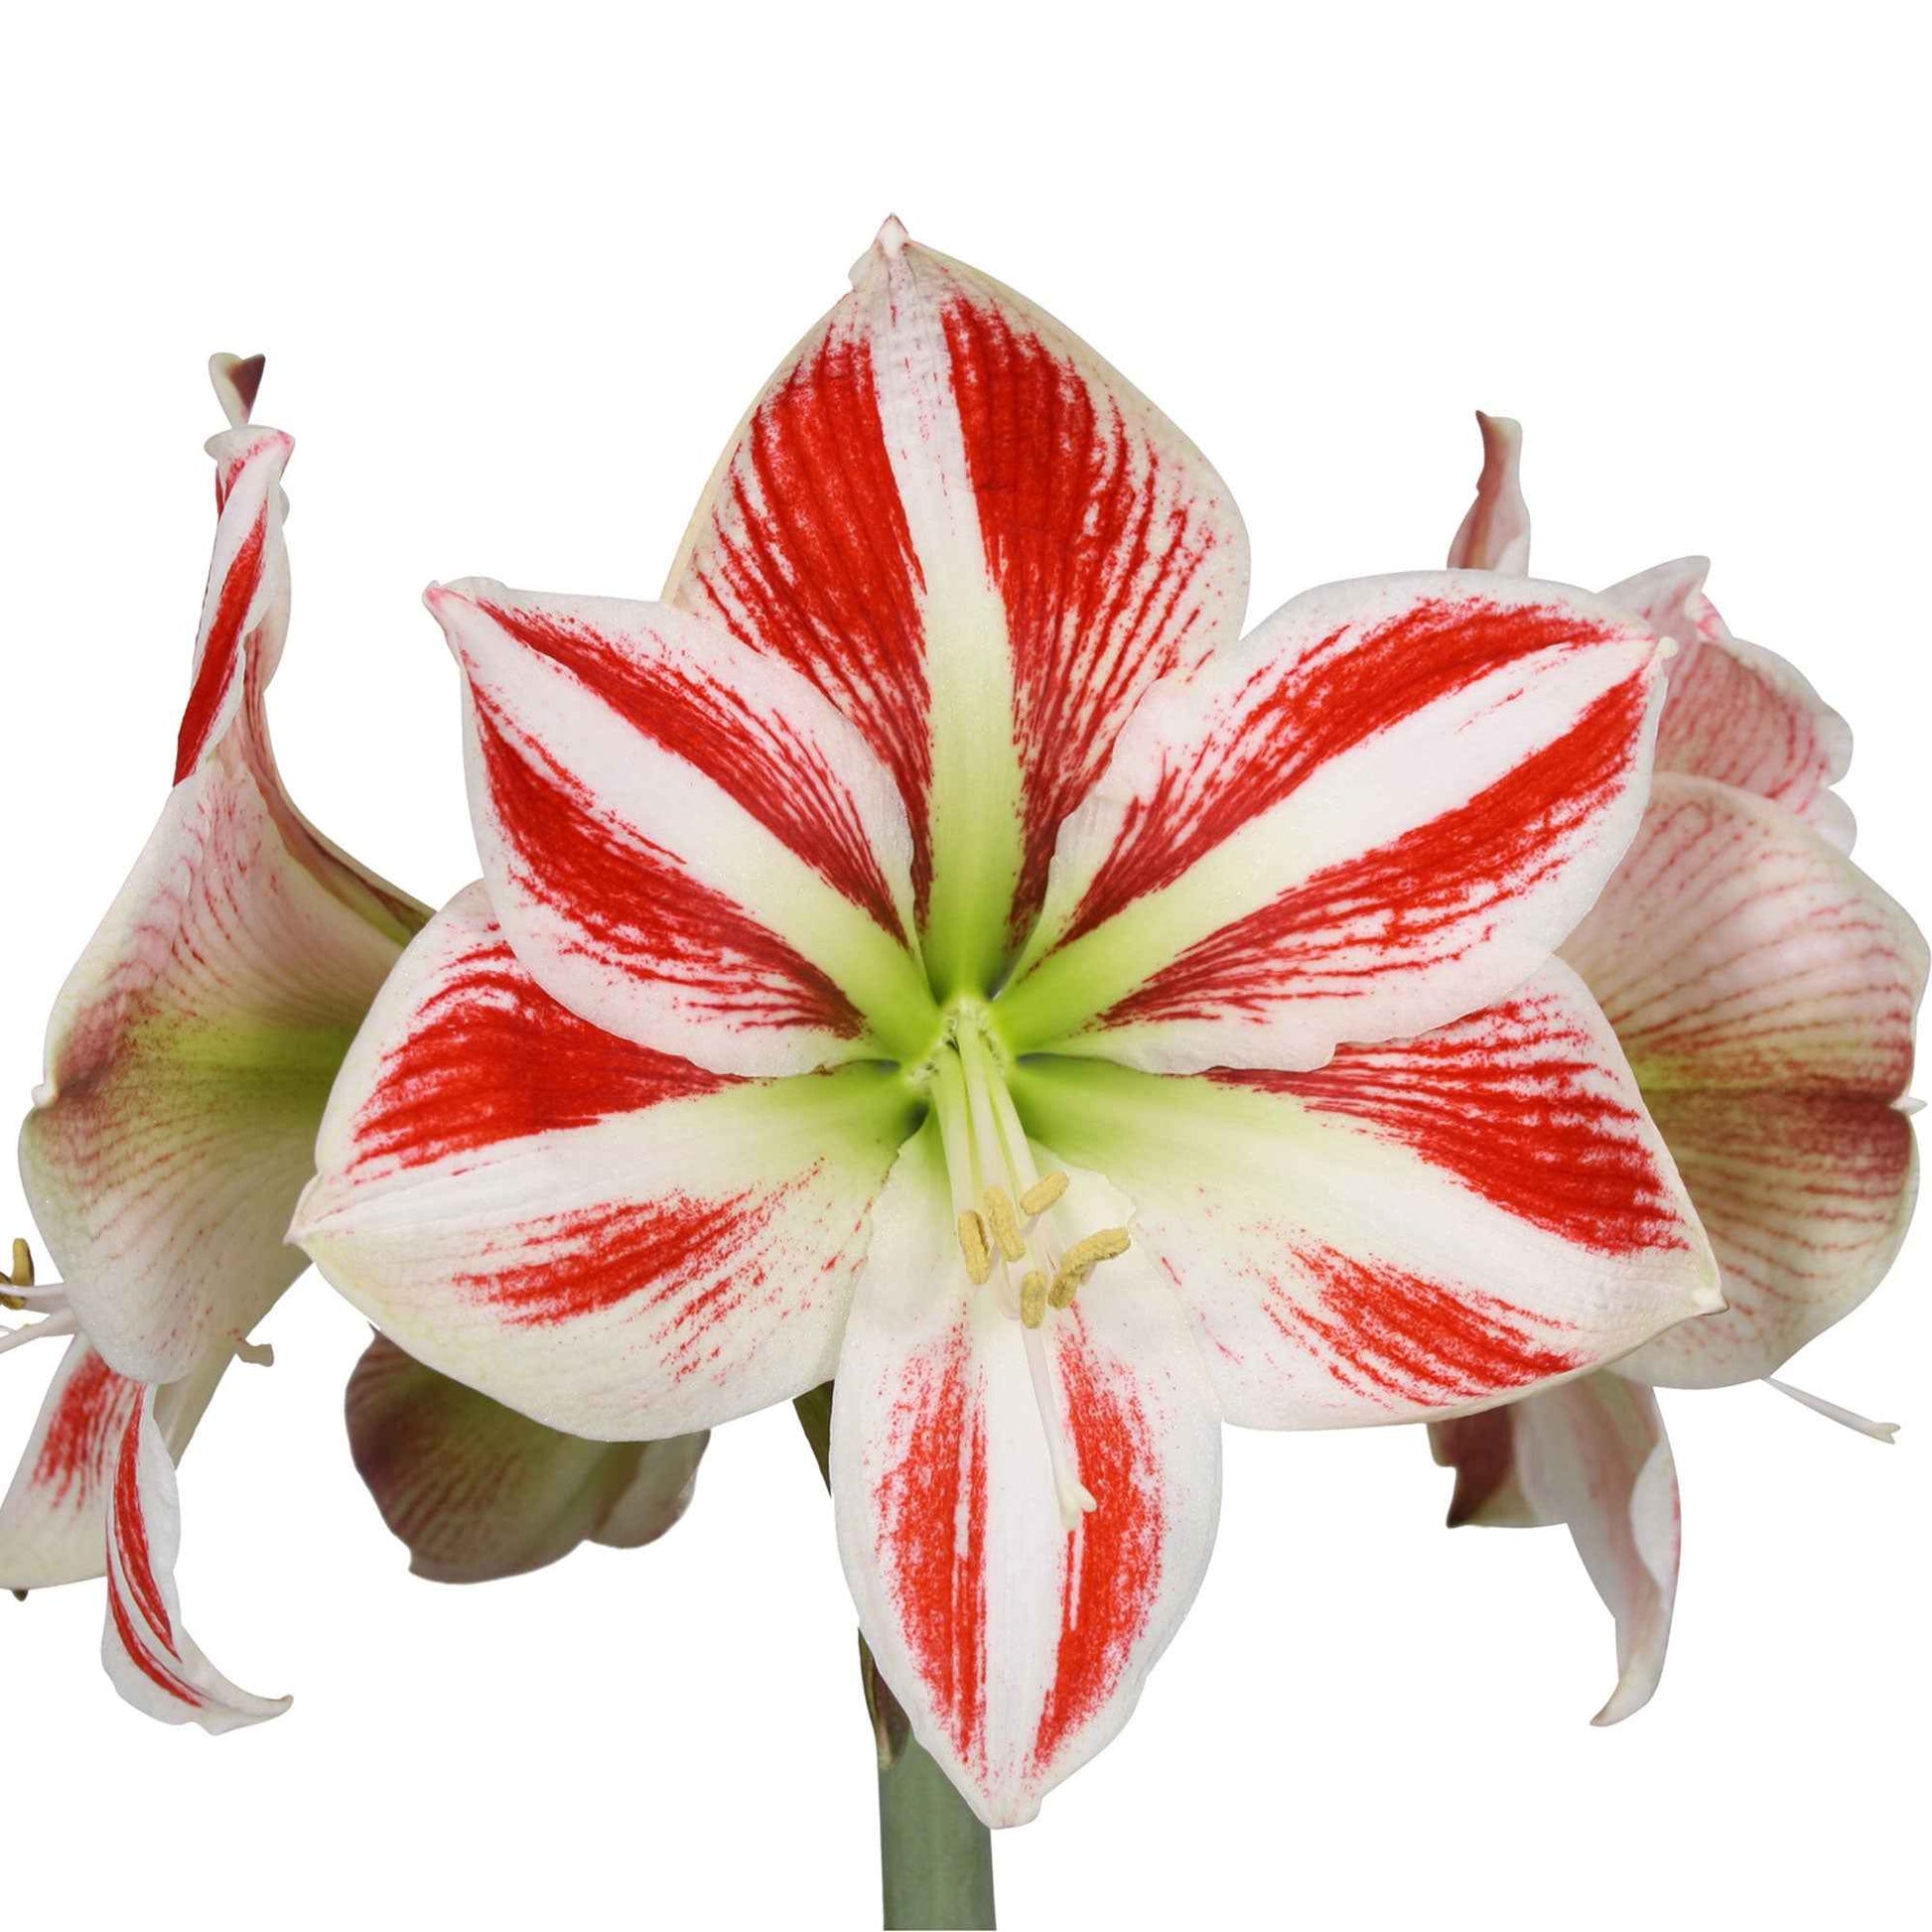 2x Amaryllis Hippeastrum 'Striped' rouge-blanc incl. cache-pots - Amaryllis - Hippeastrum